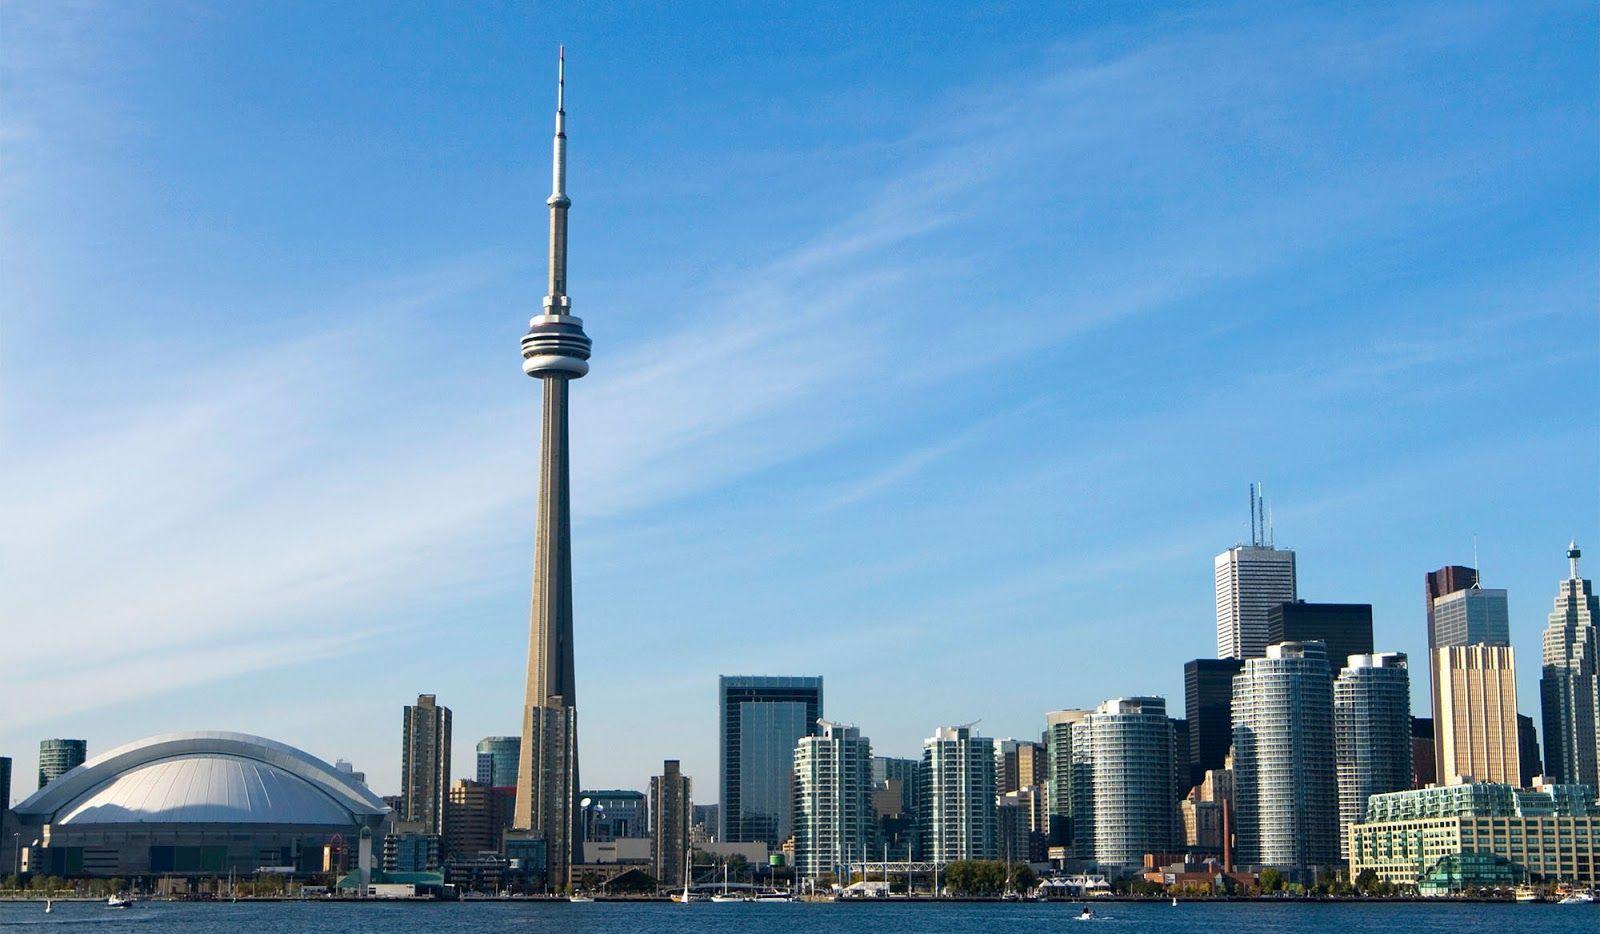 The CN Tower Toronto, Canada